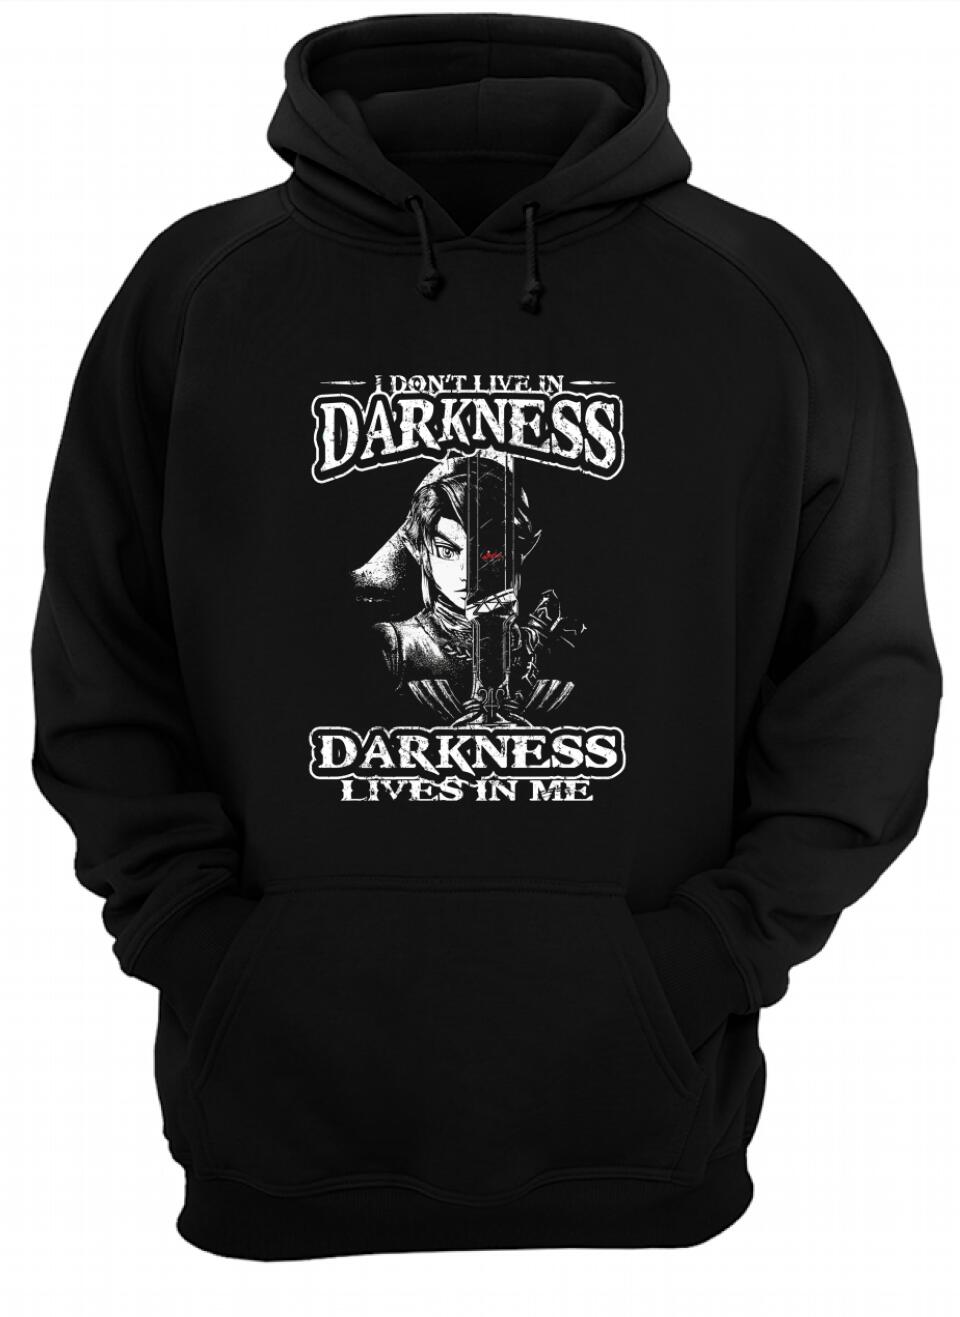 Dark Link - Darkness lives in me